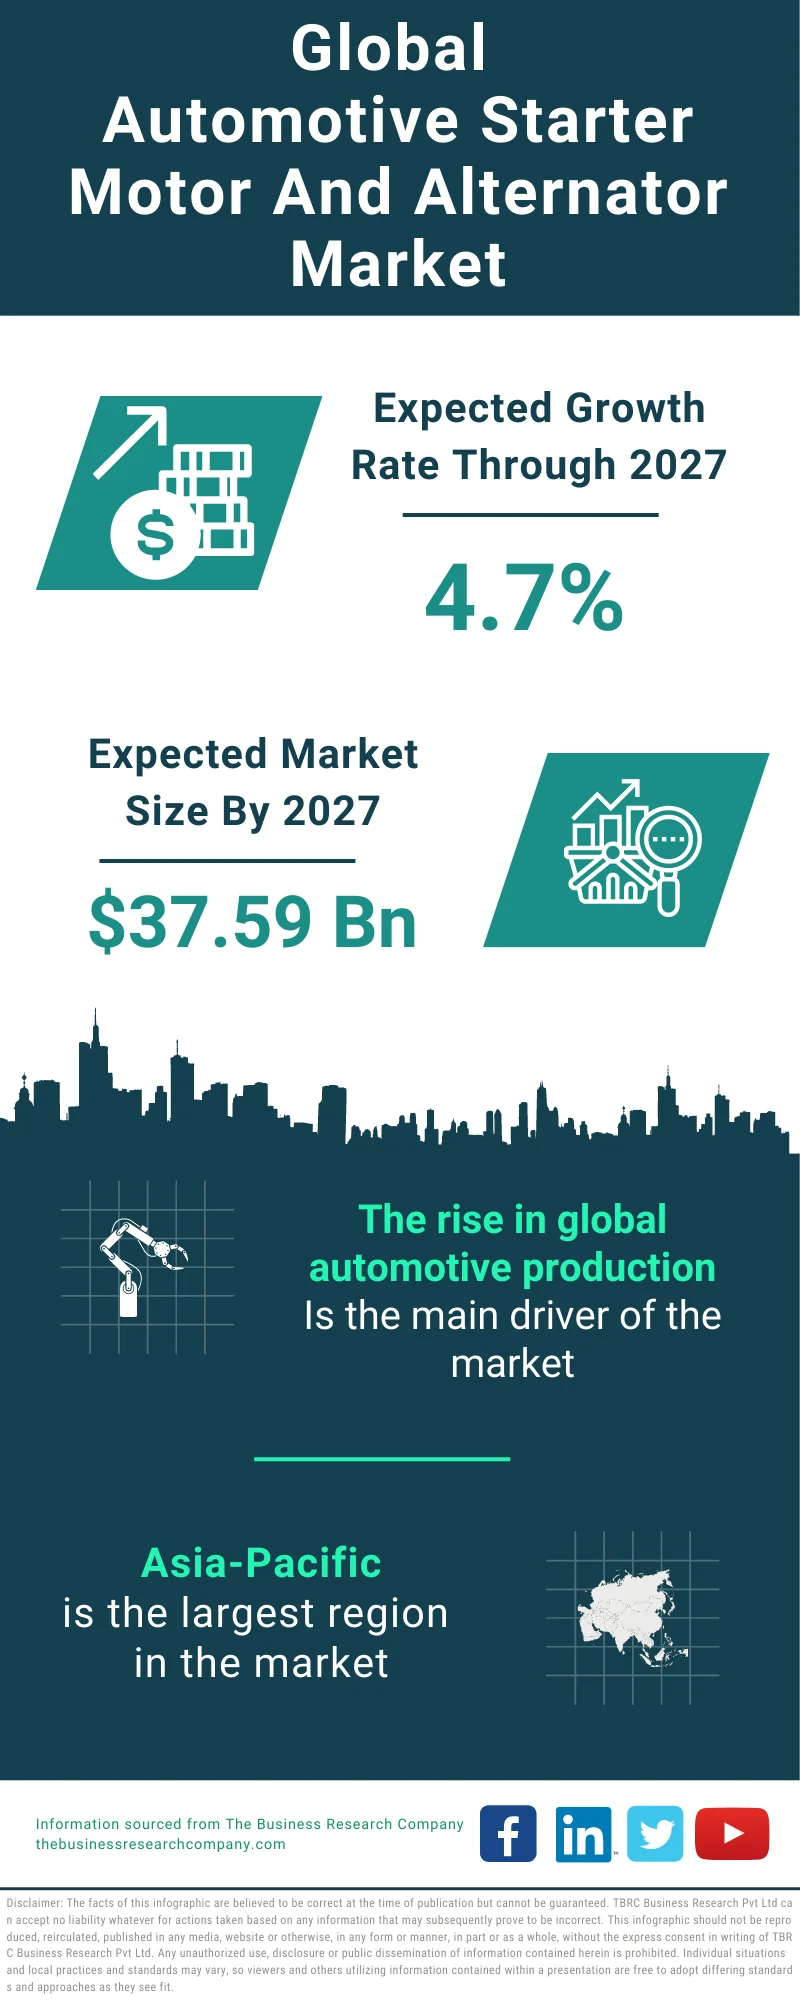 Automotive Starter Motor And Alternator Global Market Report 2023